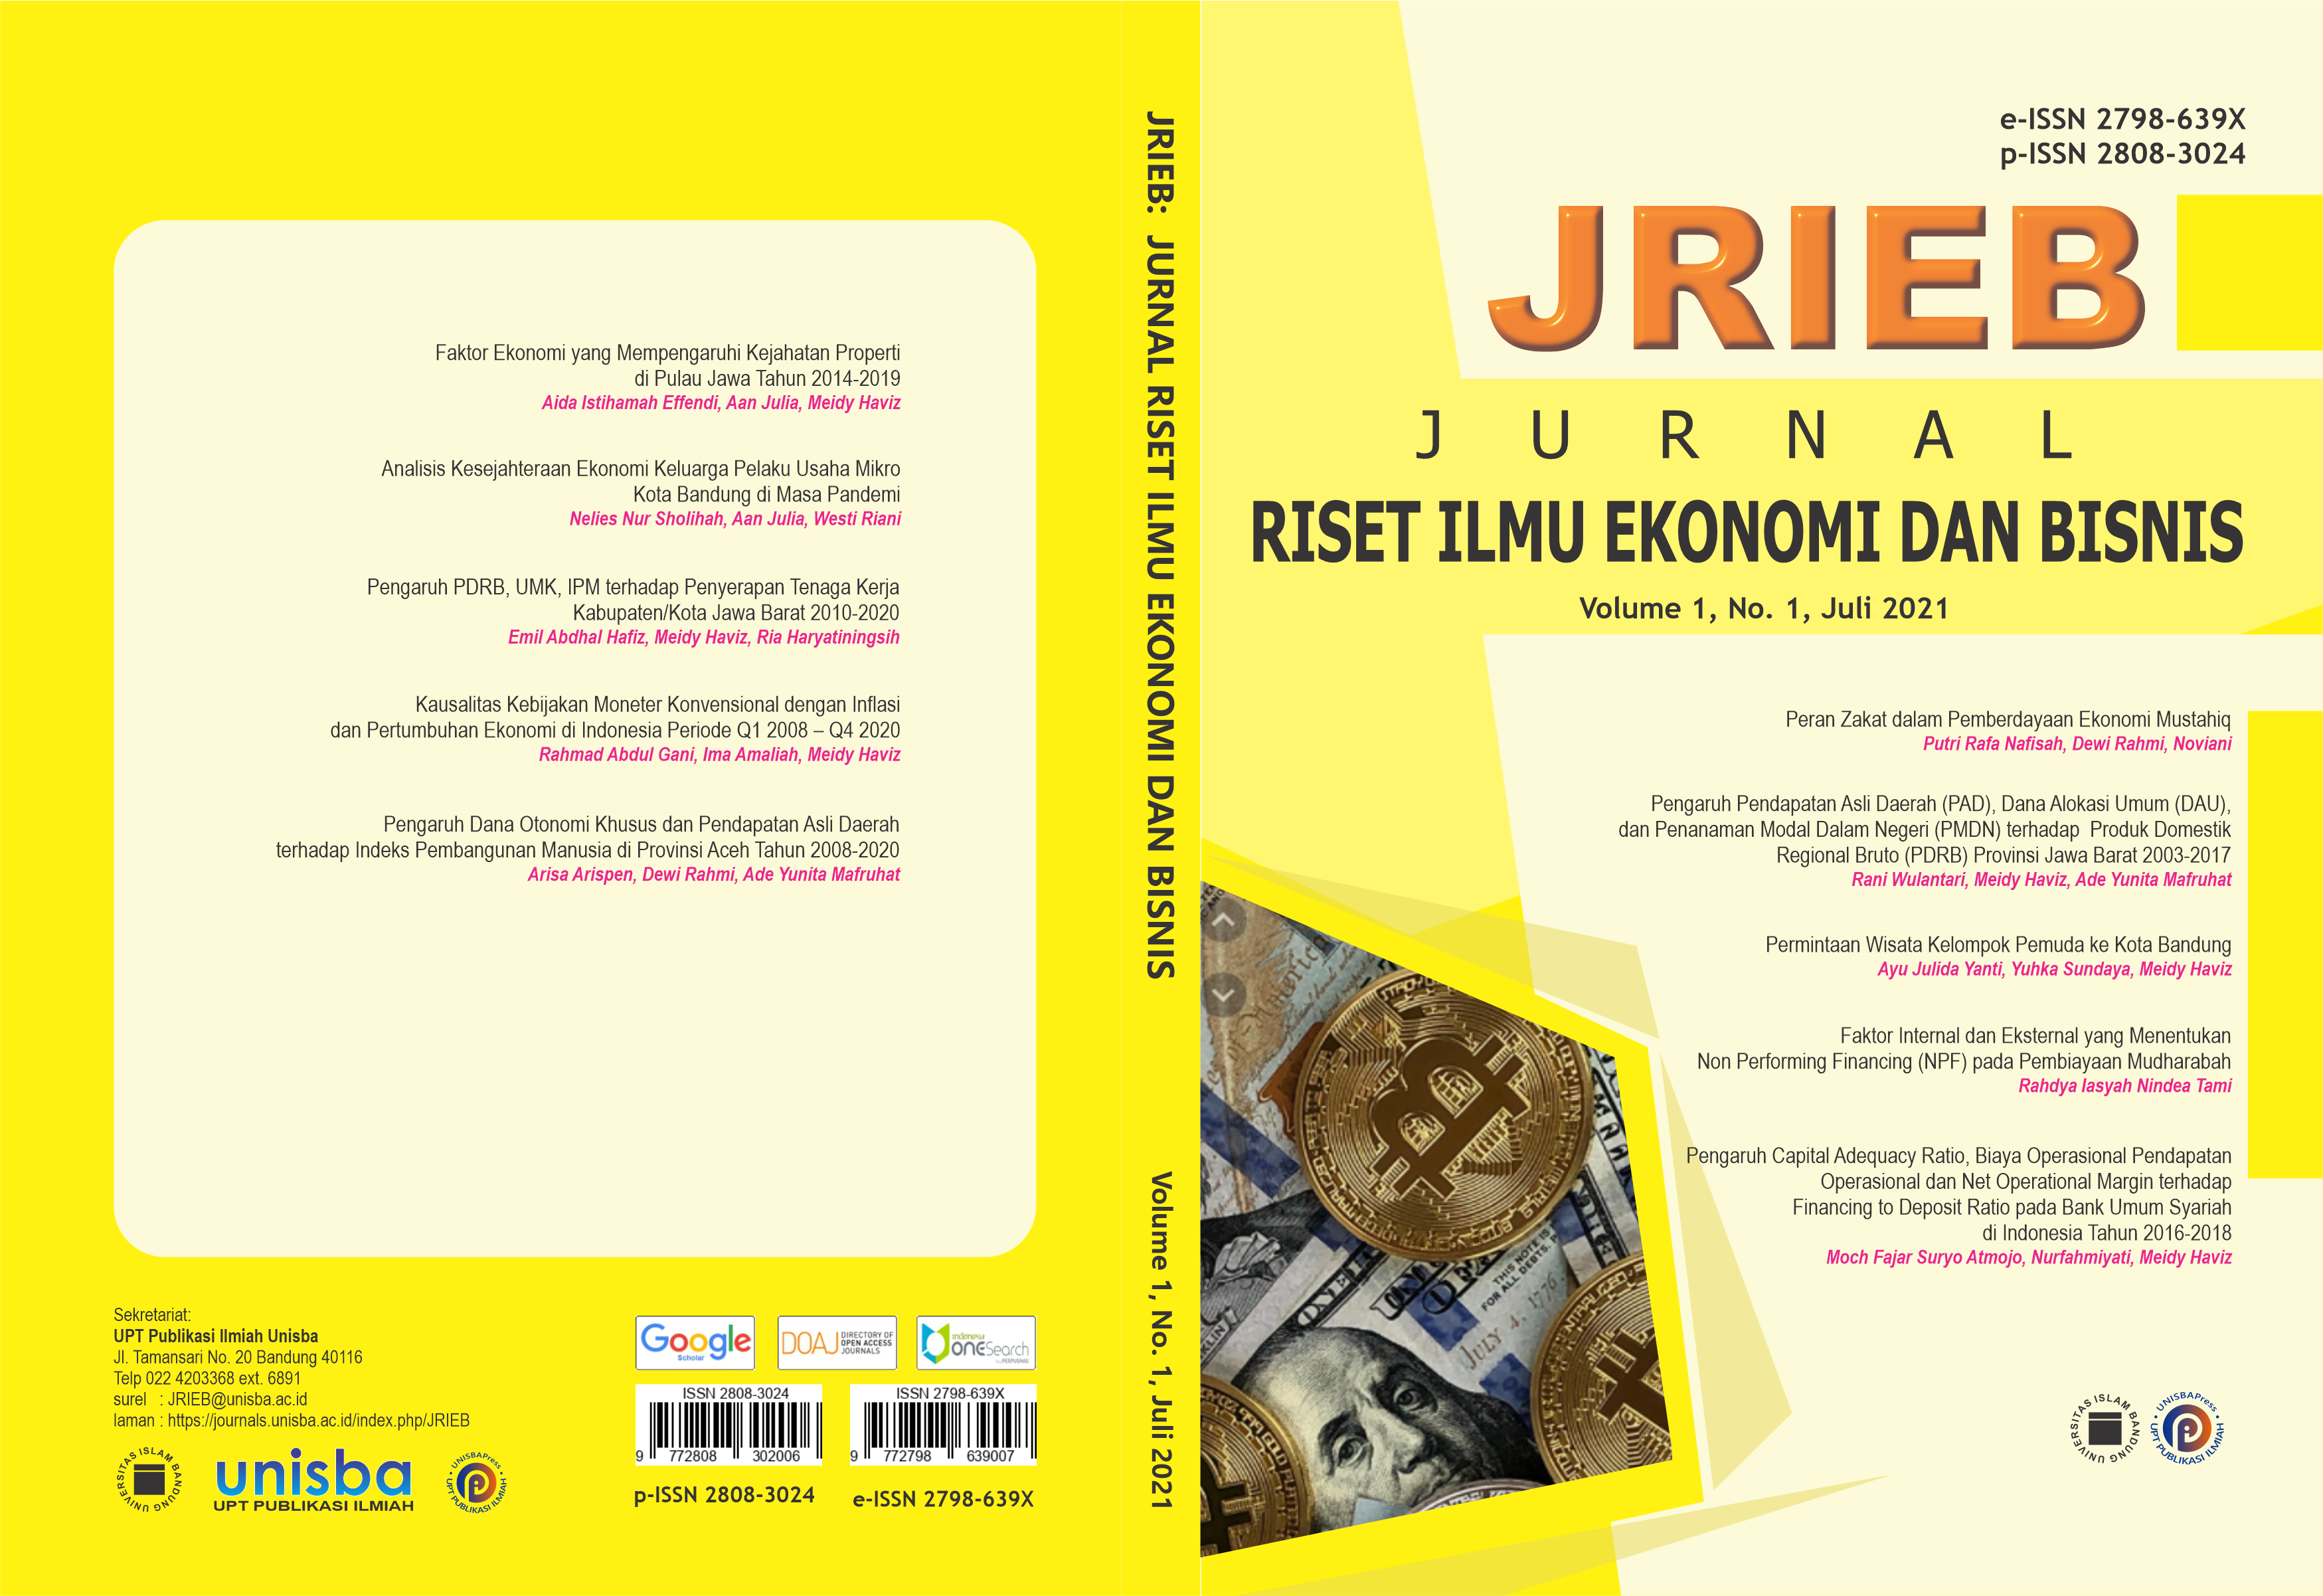 					View Volume 1, No. 1, Juli 2021, Jurnal Riset Ilmu Ekonomi dan Bisnis (JRIEB)
				